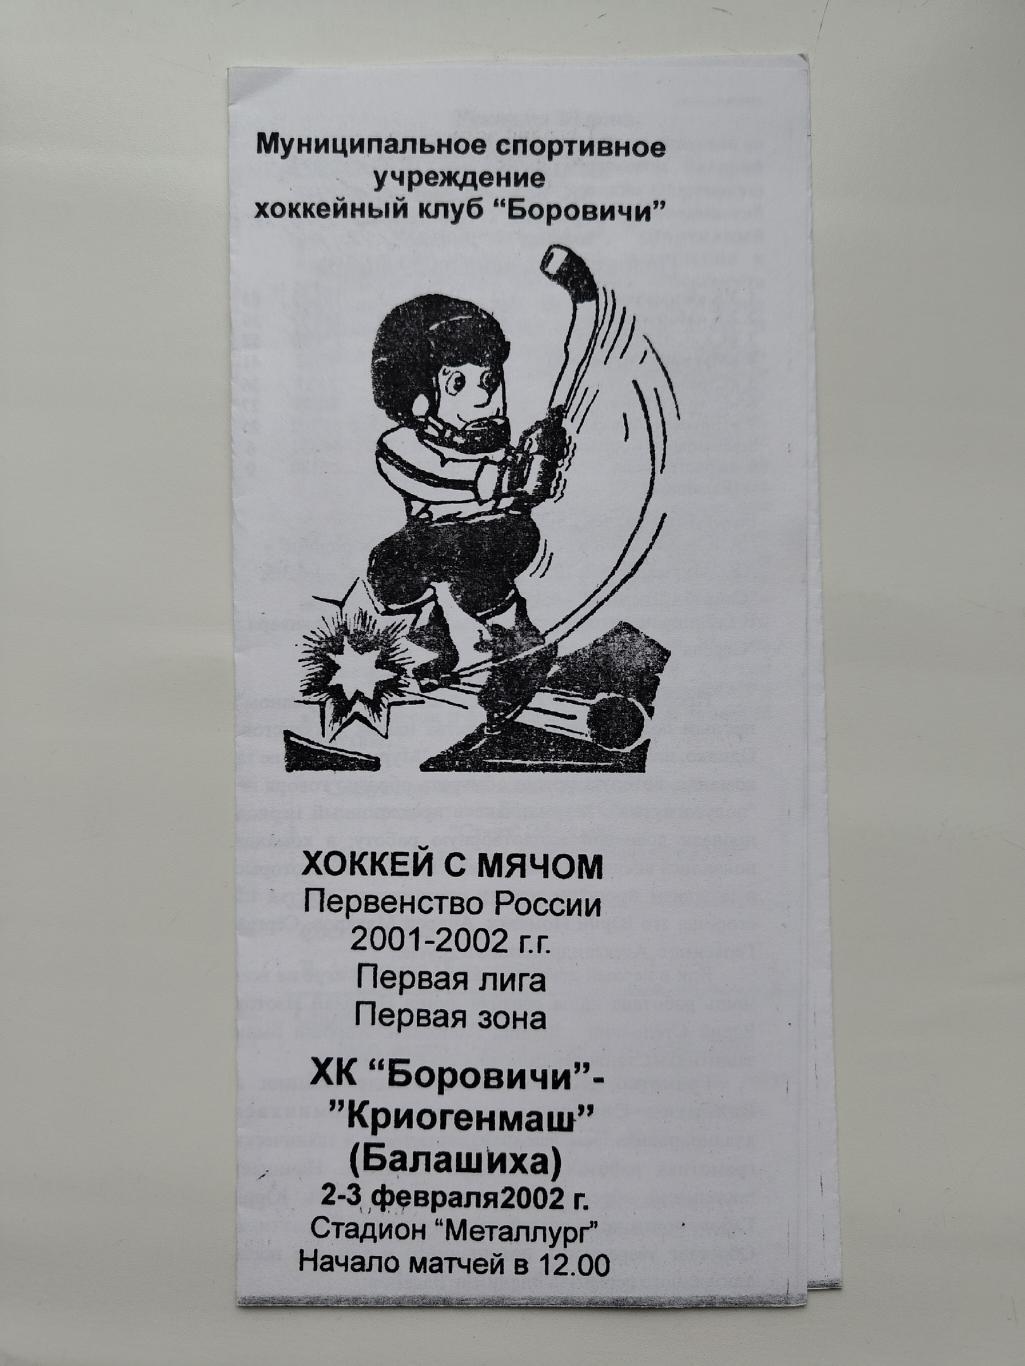 Хоккей с мячом. ХК Боровичи - Криогенмаш Балашиха 2/3 февраля 2002